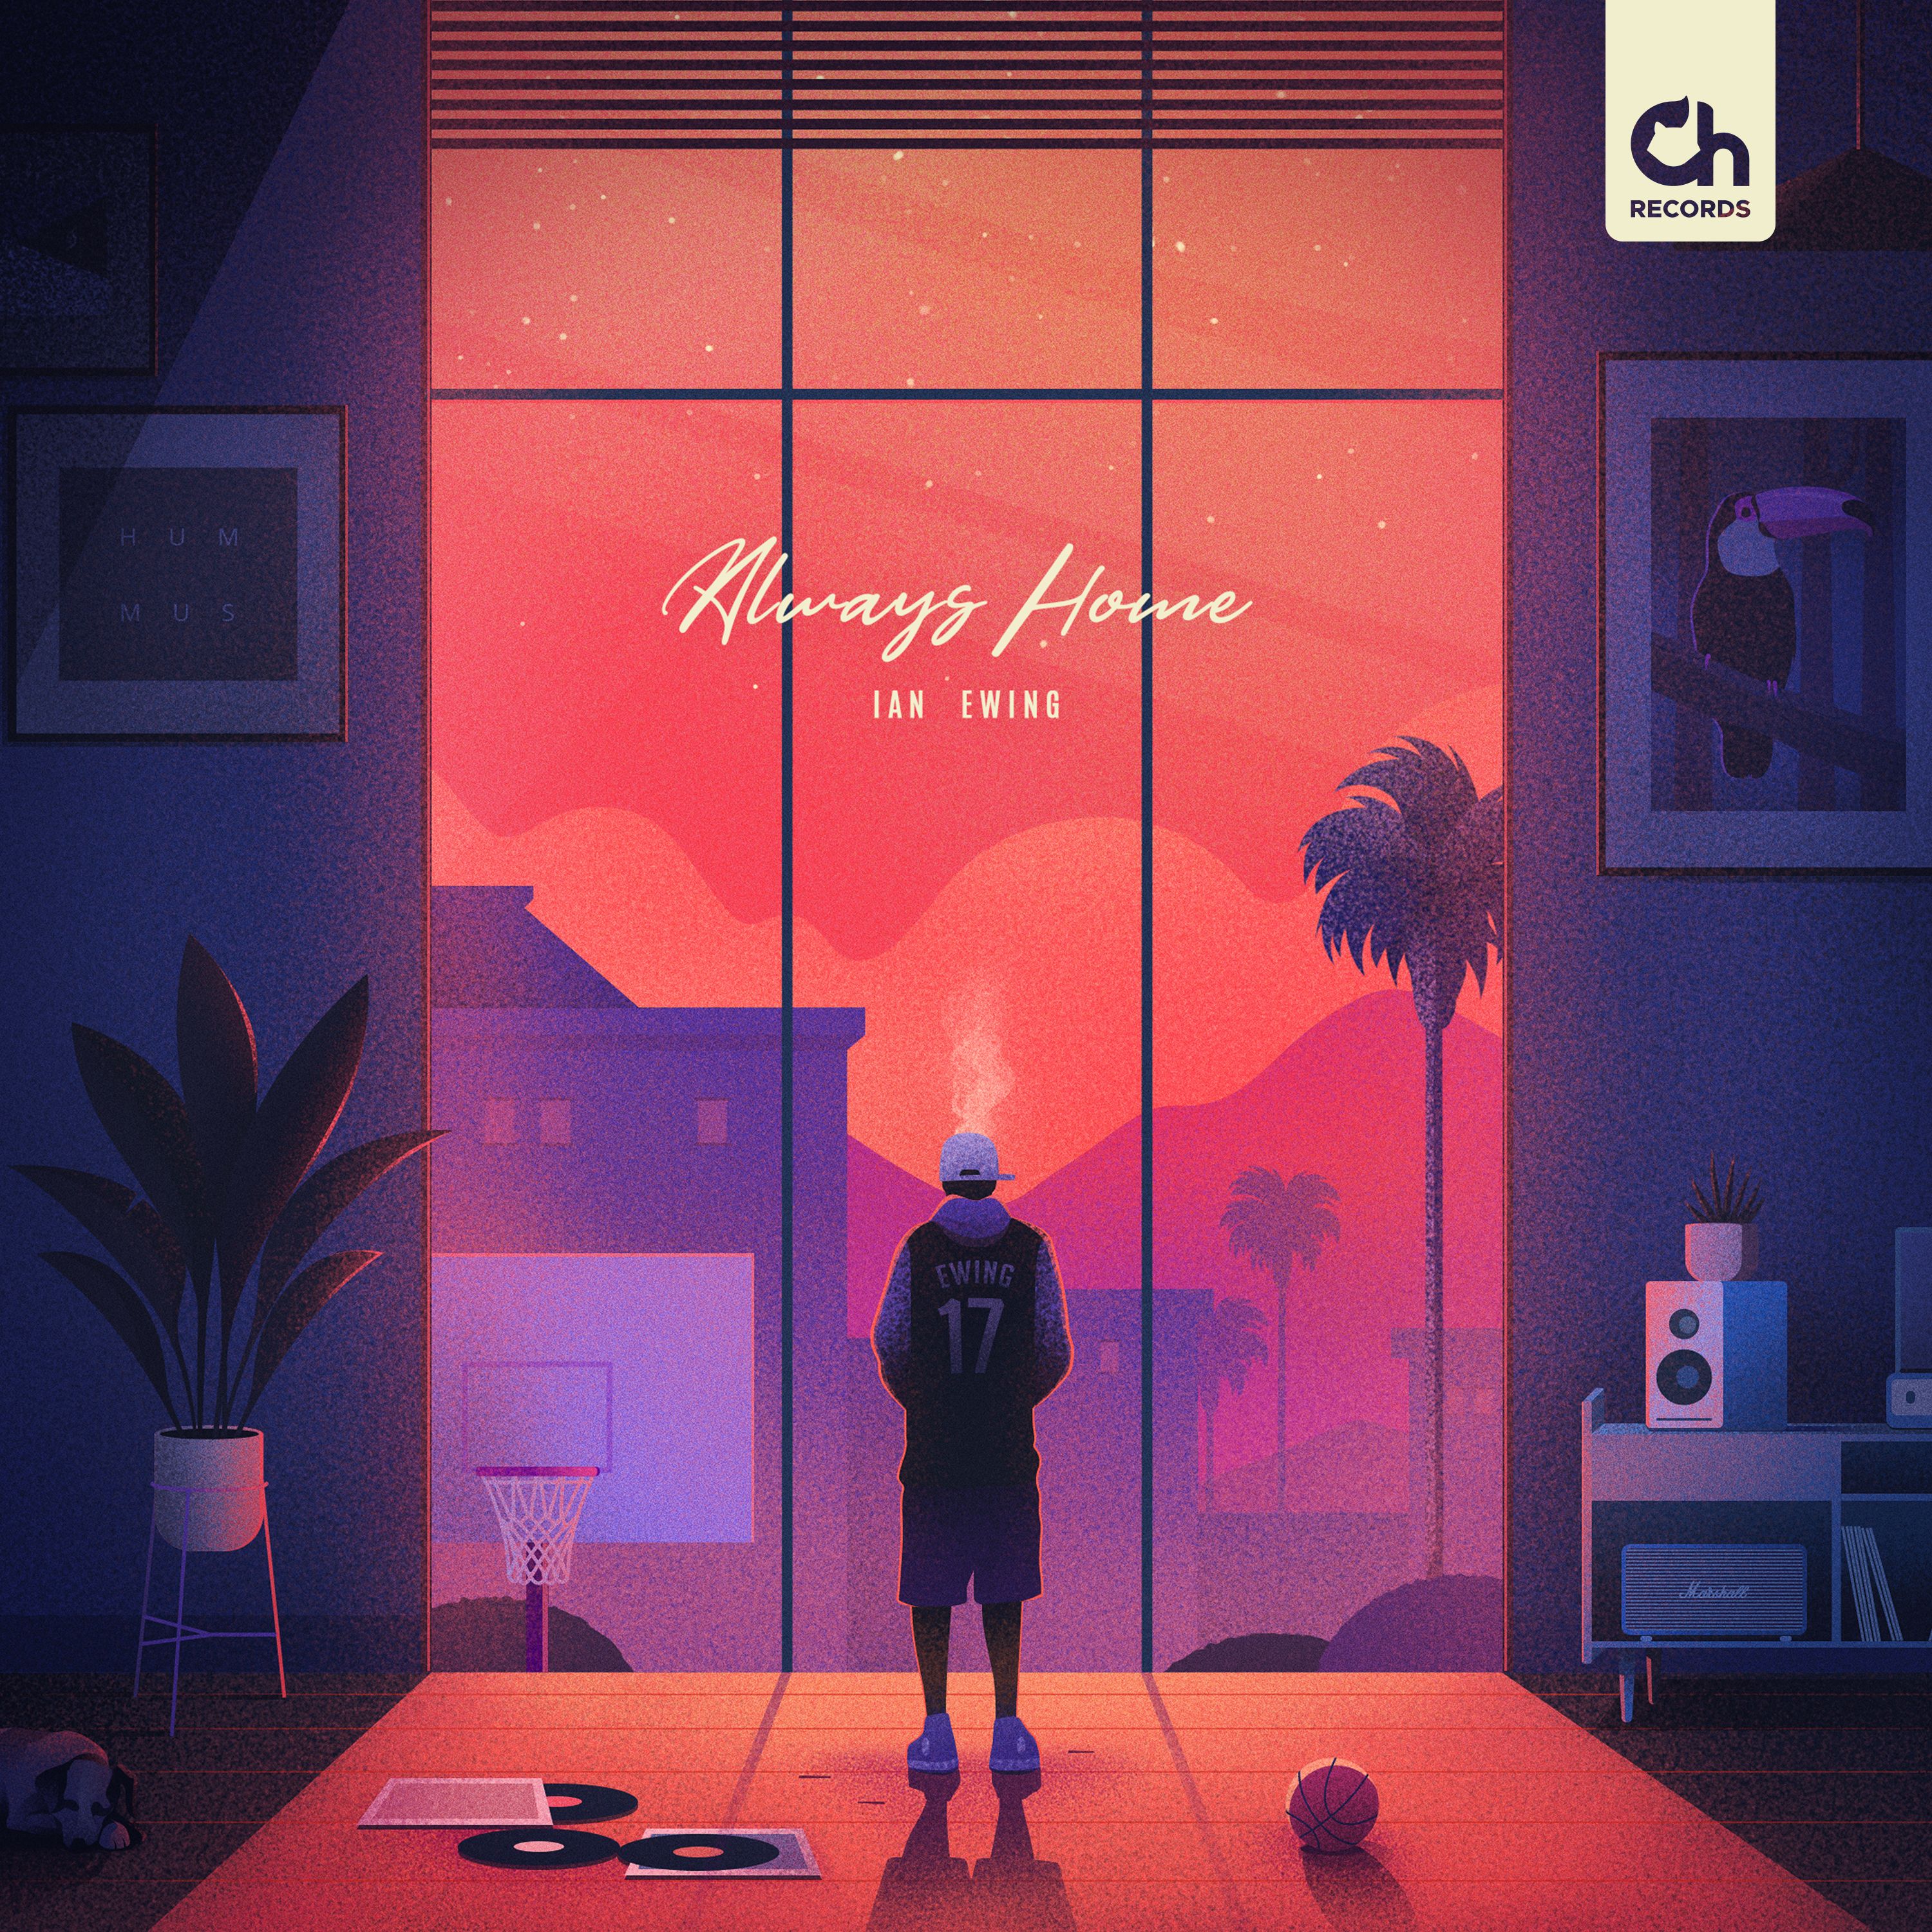 Letöltés Ian Ewing - 17 ["Always Home" EP out on 09.09]